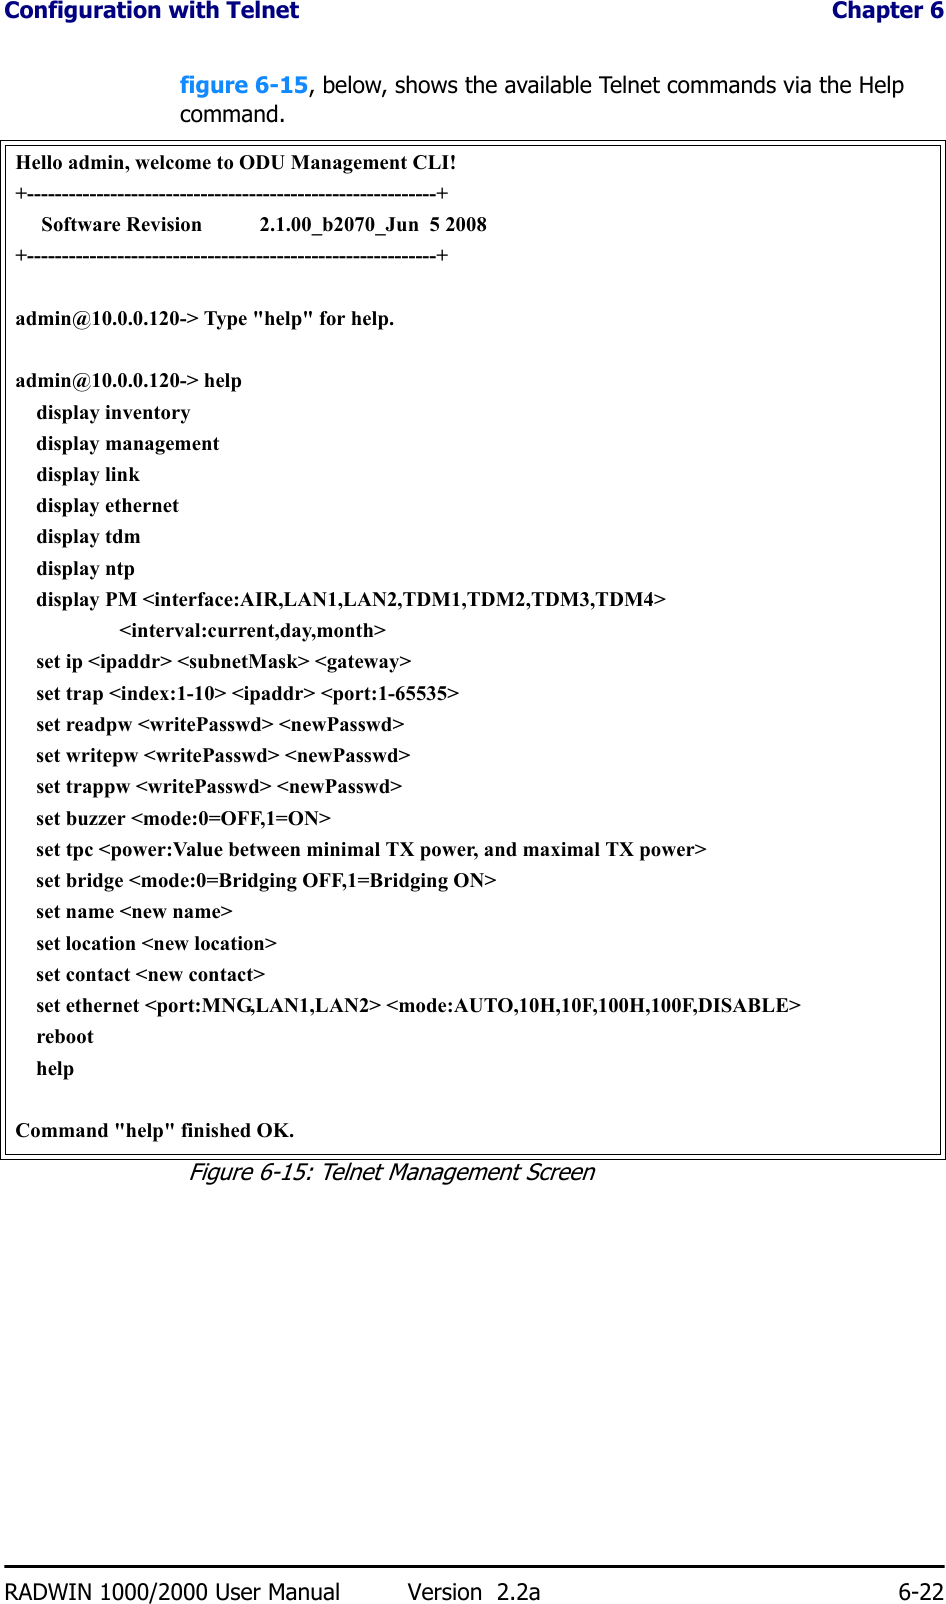 Configuration with Telnet  Chapter 6RADWIN 1000/2000 User Manual Version  2.2a 6-22figure 6-15, below, shows the available Telnet commands via the Help command.Hello admin, welcome to ODU Management CLI!+-----------------------------------------------------------+     Software Revision           2.1.00_b2070_Jun  5 2008+-----------------------------------------------------------+admin@10.0.0.120-&gt; Type &quot;help&quot; for help.admin@10.0.0.120-&gt; help    display inventory    display management    display link    display ethernet    display tdm    display ntp    display PM &lt;interface:AIR,LAN1,LAN2,TDM1,TDM2,TDM3,TDM4&gt;                    &lt;interval:current,day,month&gt;    set ip &lt;ipaddr&gt; &lt;subnetMask&gt; &lt;gateway&gt;    set trap &lt;index:1-10&gt; &lt;ipaddr&gt; &lt;port:1-65535&gt;    set readpw &lt;writePasswd&gt; &lt;newPasswd&gt;    set writepw &lt;writePasswd&gt; &lt;newPasswd&gt;    set trappw &lt;writePasswd&gt; &lt;newPasswd&gt;    set buzzer &lt;mode:0=OFF,1=ON&gt;    set tpc &lt;power:Value between minimal TX power, and maximal TX power&gt;    set bridge &lt;mode:0=Bridging OFF,1=Bridging ON&gt;    set name &lt;new name&gt;    set location &lt;new location&gt;    set contact &lt;new contact&gt;    set ethernet &lt;port:MNG,LAN1,LAN2&gt; &lt;mode:AUTO,10H,10F,100H,100F,DISABLE&gt;    reboot    helpCommand &quot;help&quot; finished OK.Figure 6-15: Telnet Management Screen